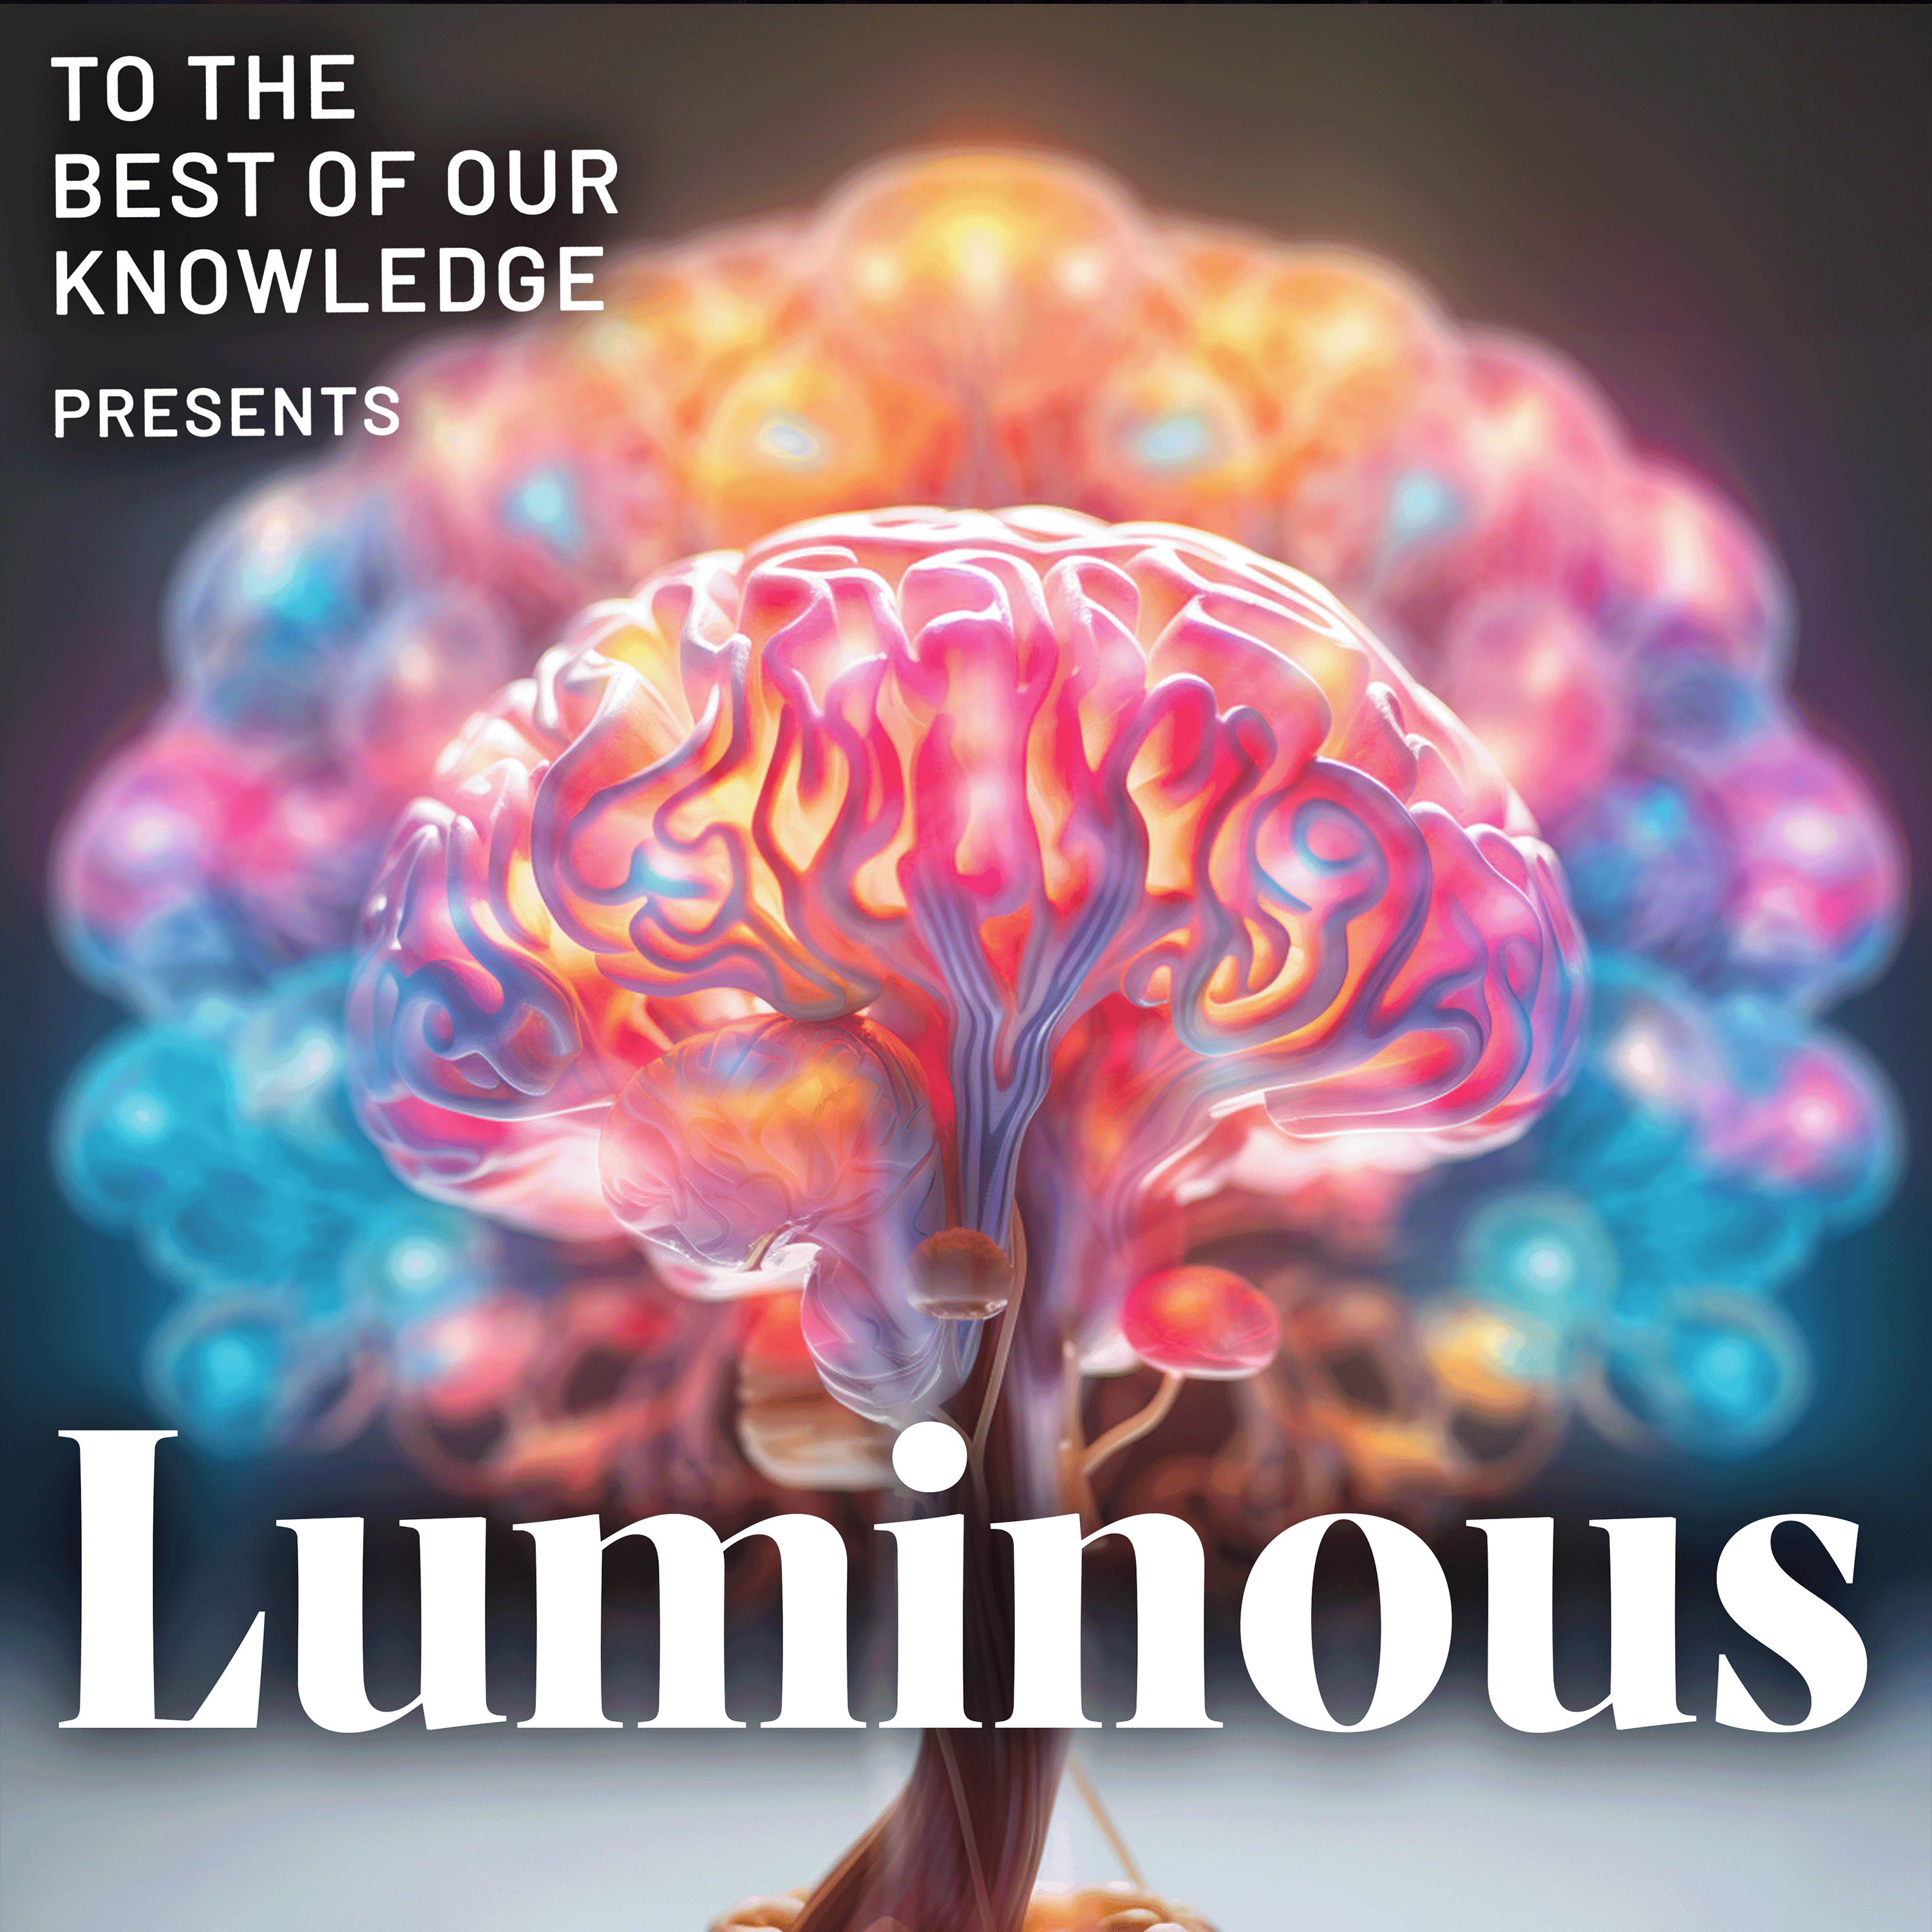 Thumbnail for "Luminous: Your Brain on Shrooms".